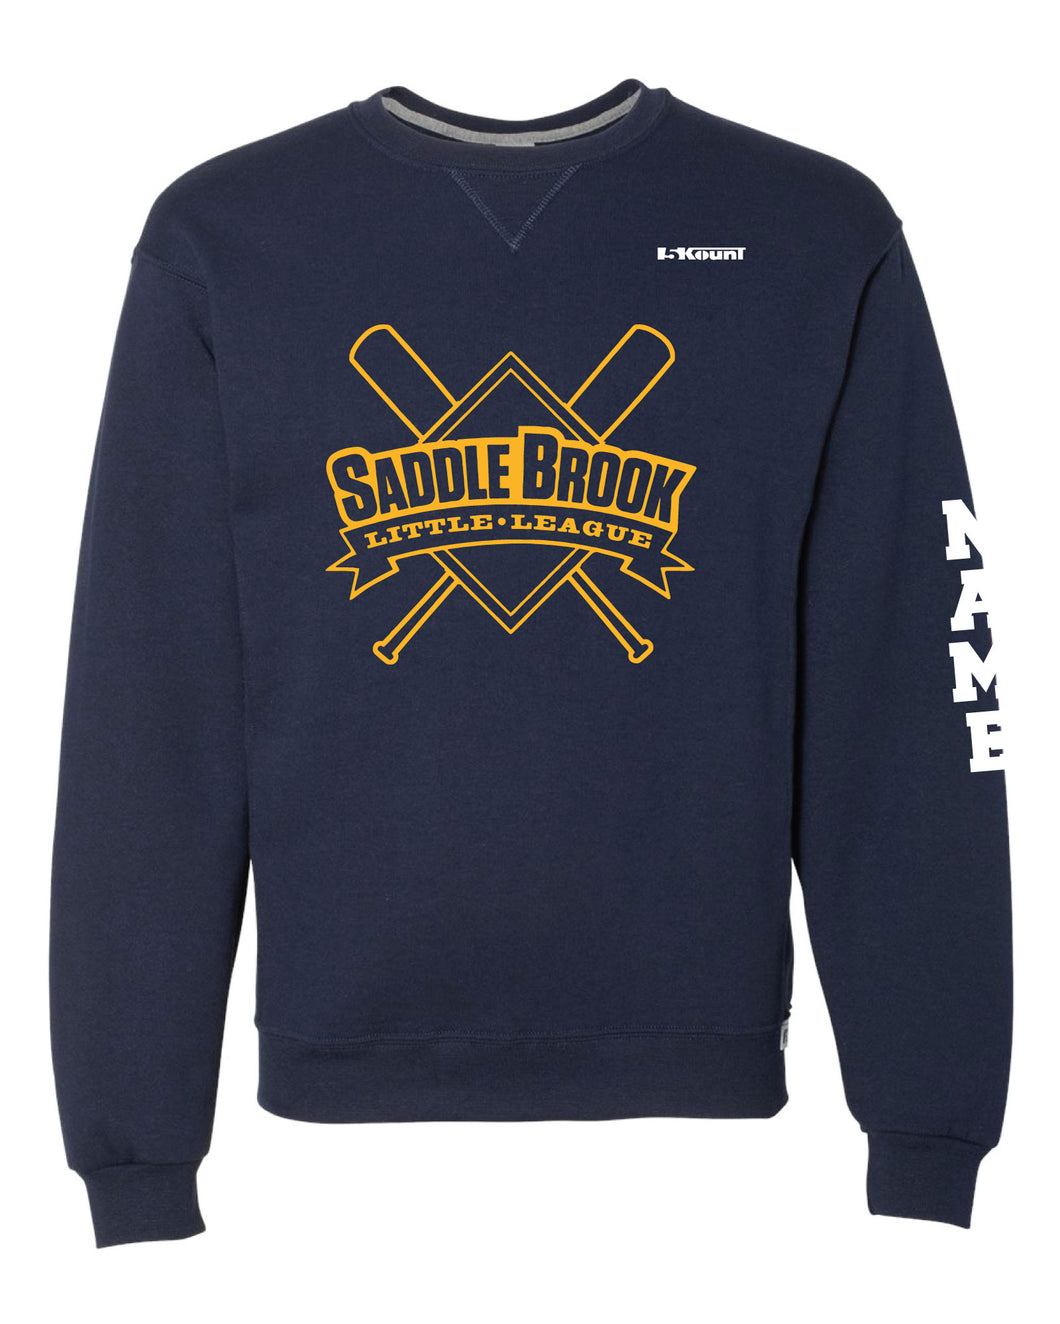 Saddle Brook Baseball Cotton Crewneck Sweatshirt - Navy - 5KounT